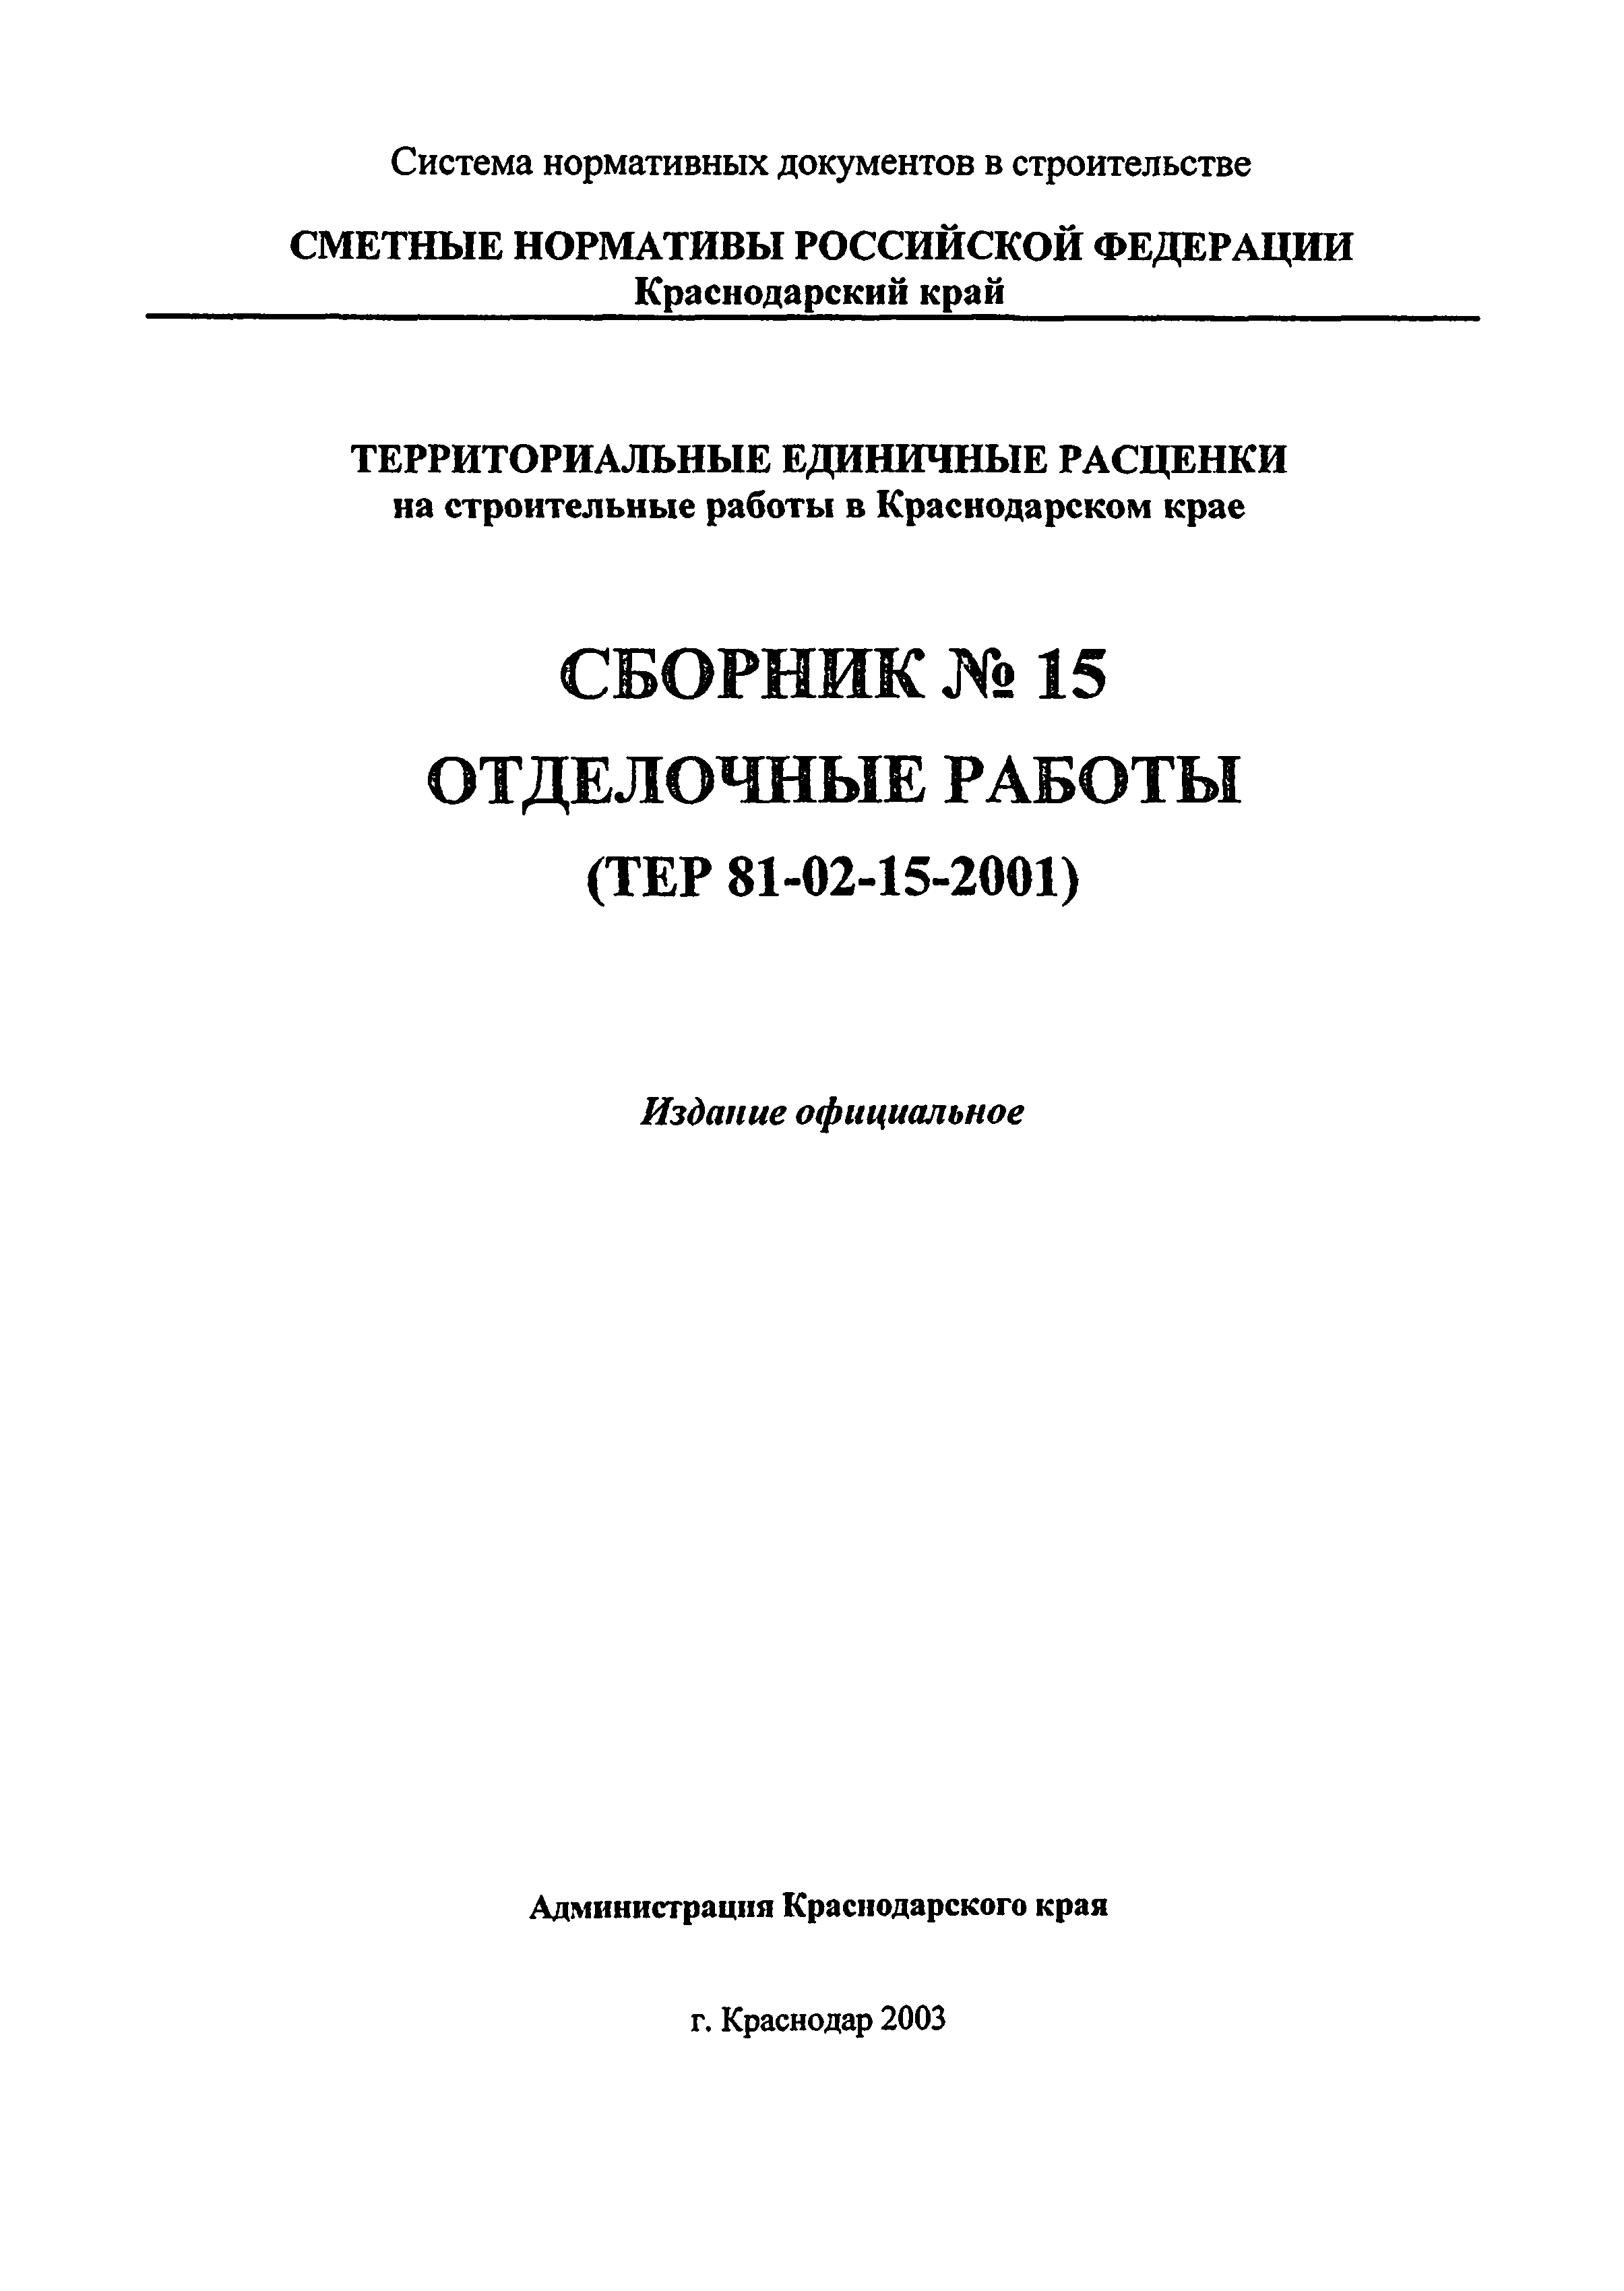 ТЕР Краснодарского края 2001-15